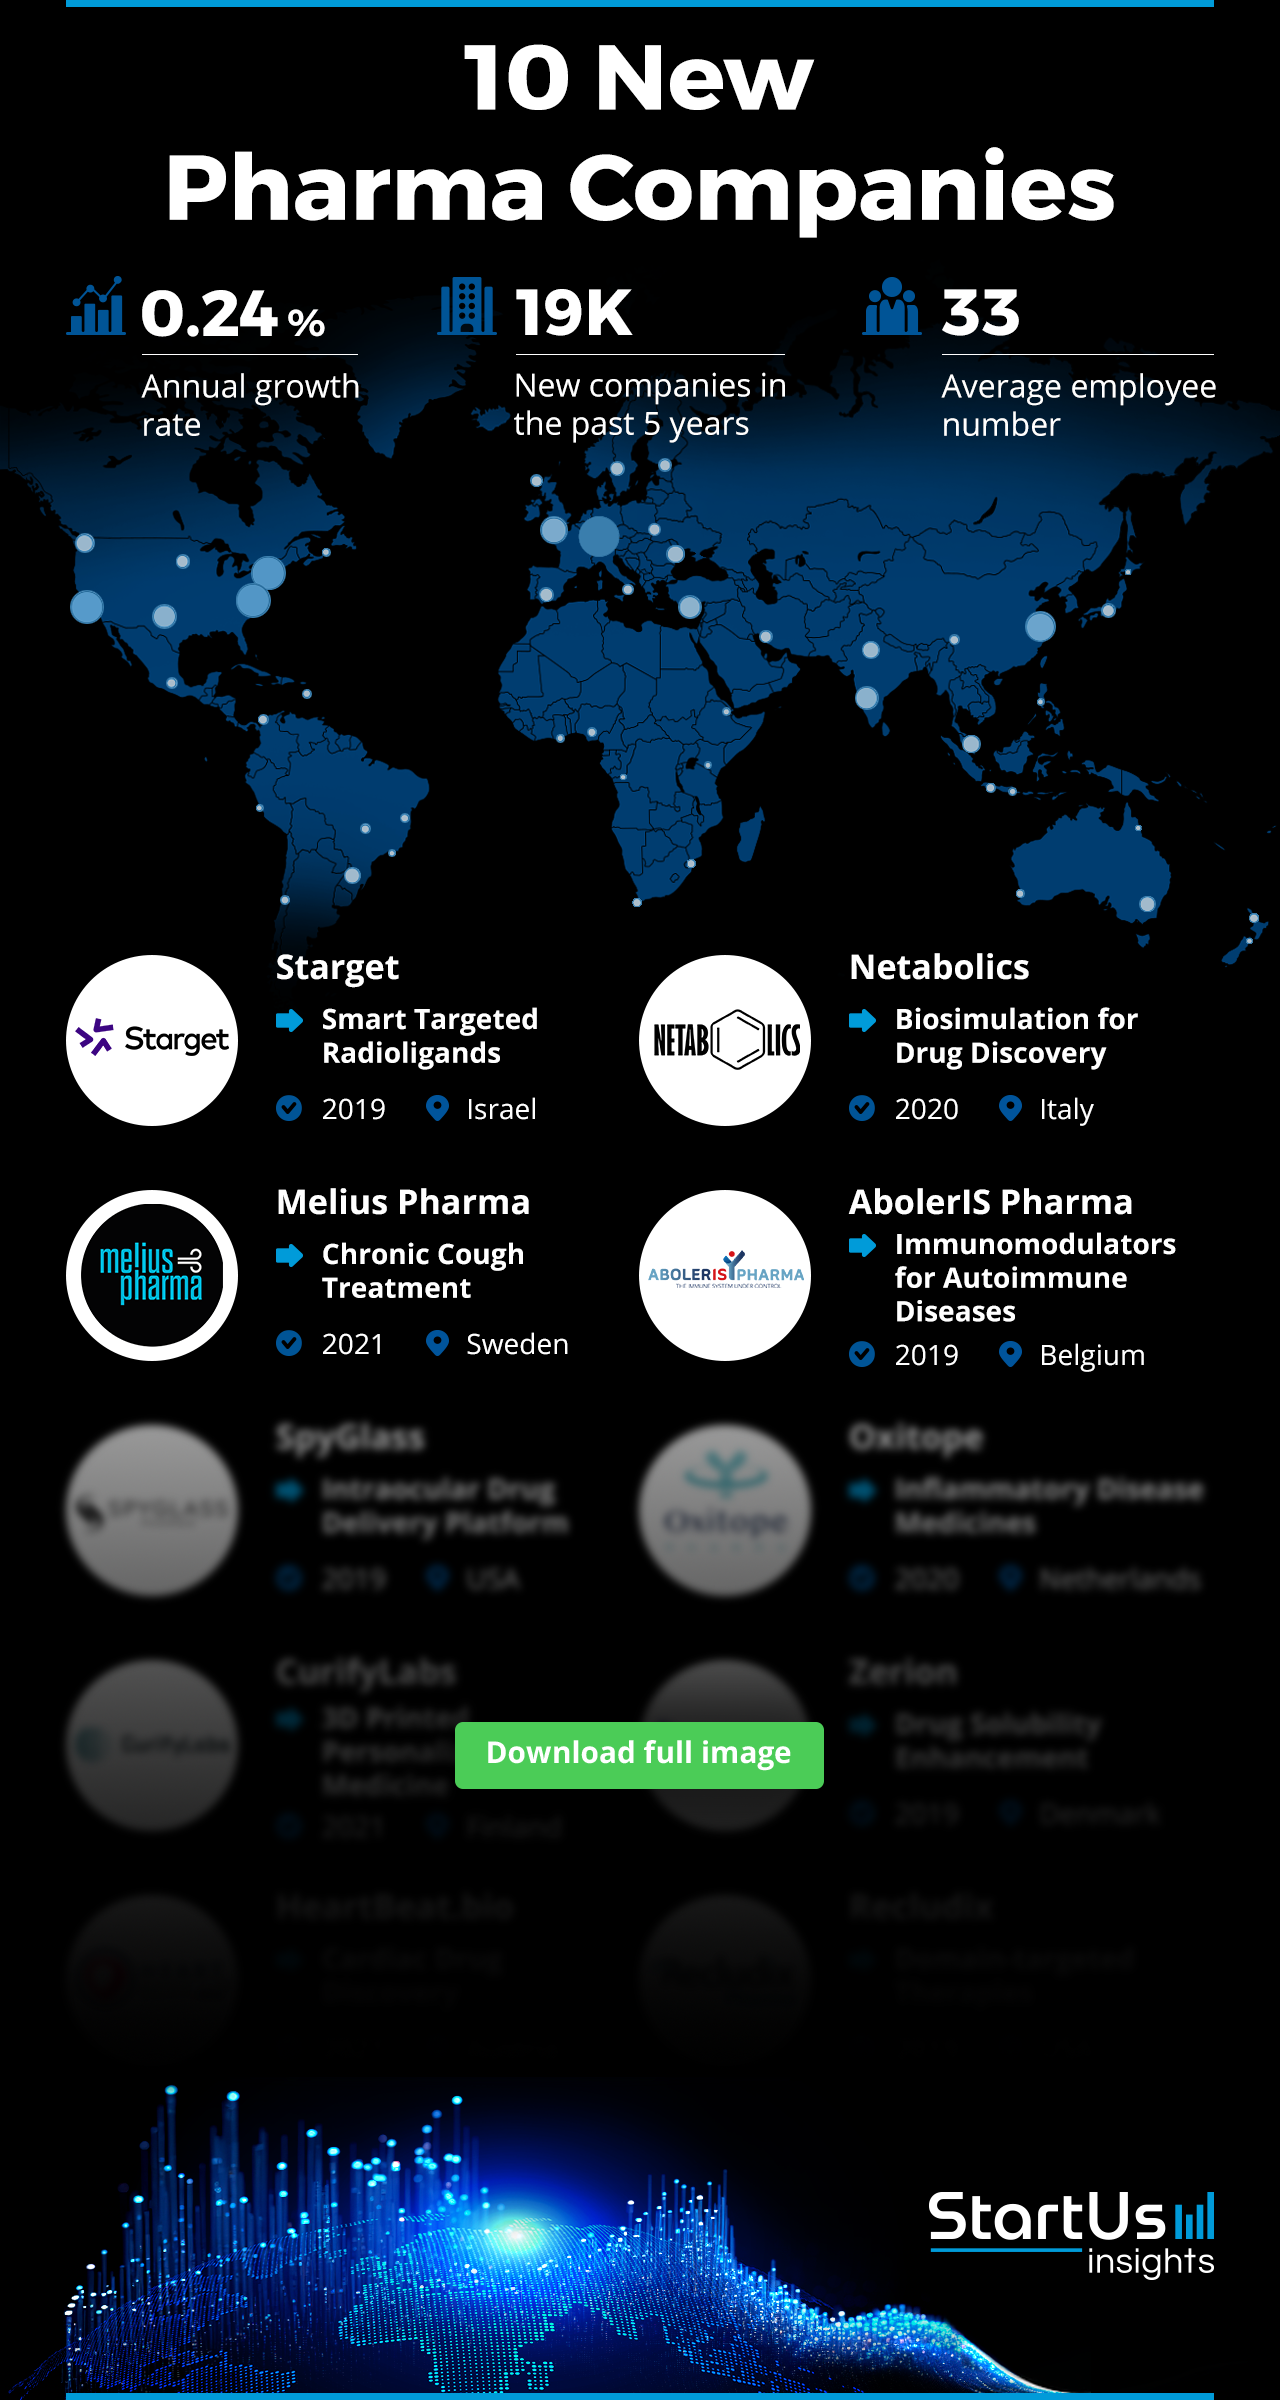 New-Pharma-Companies-Logos-Blurred-StartUs-Insights-noresize